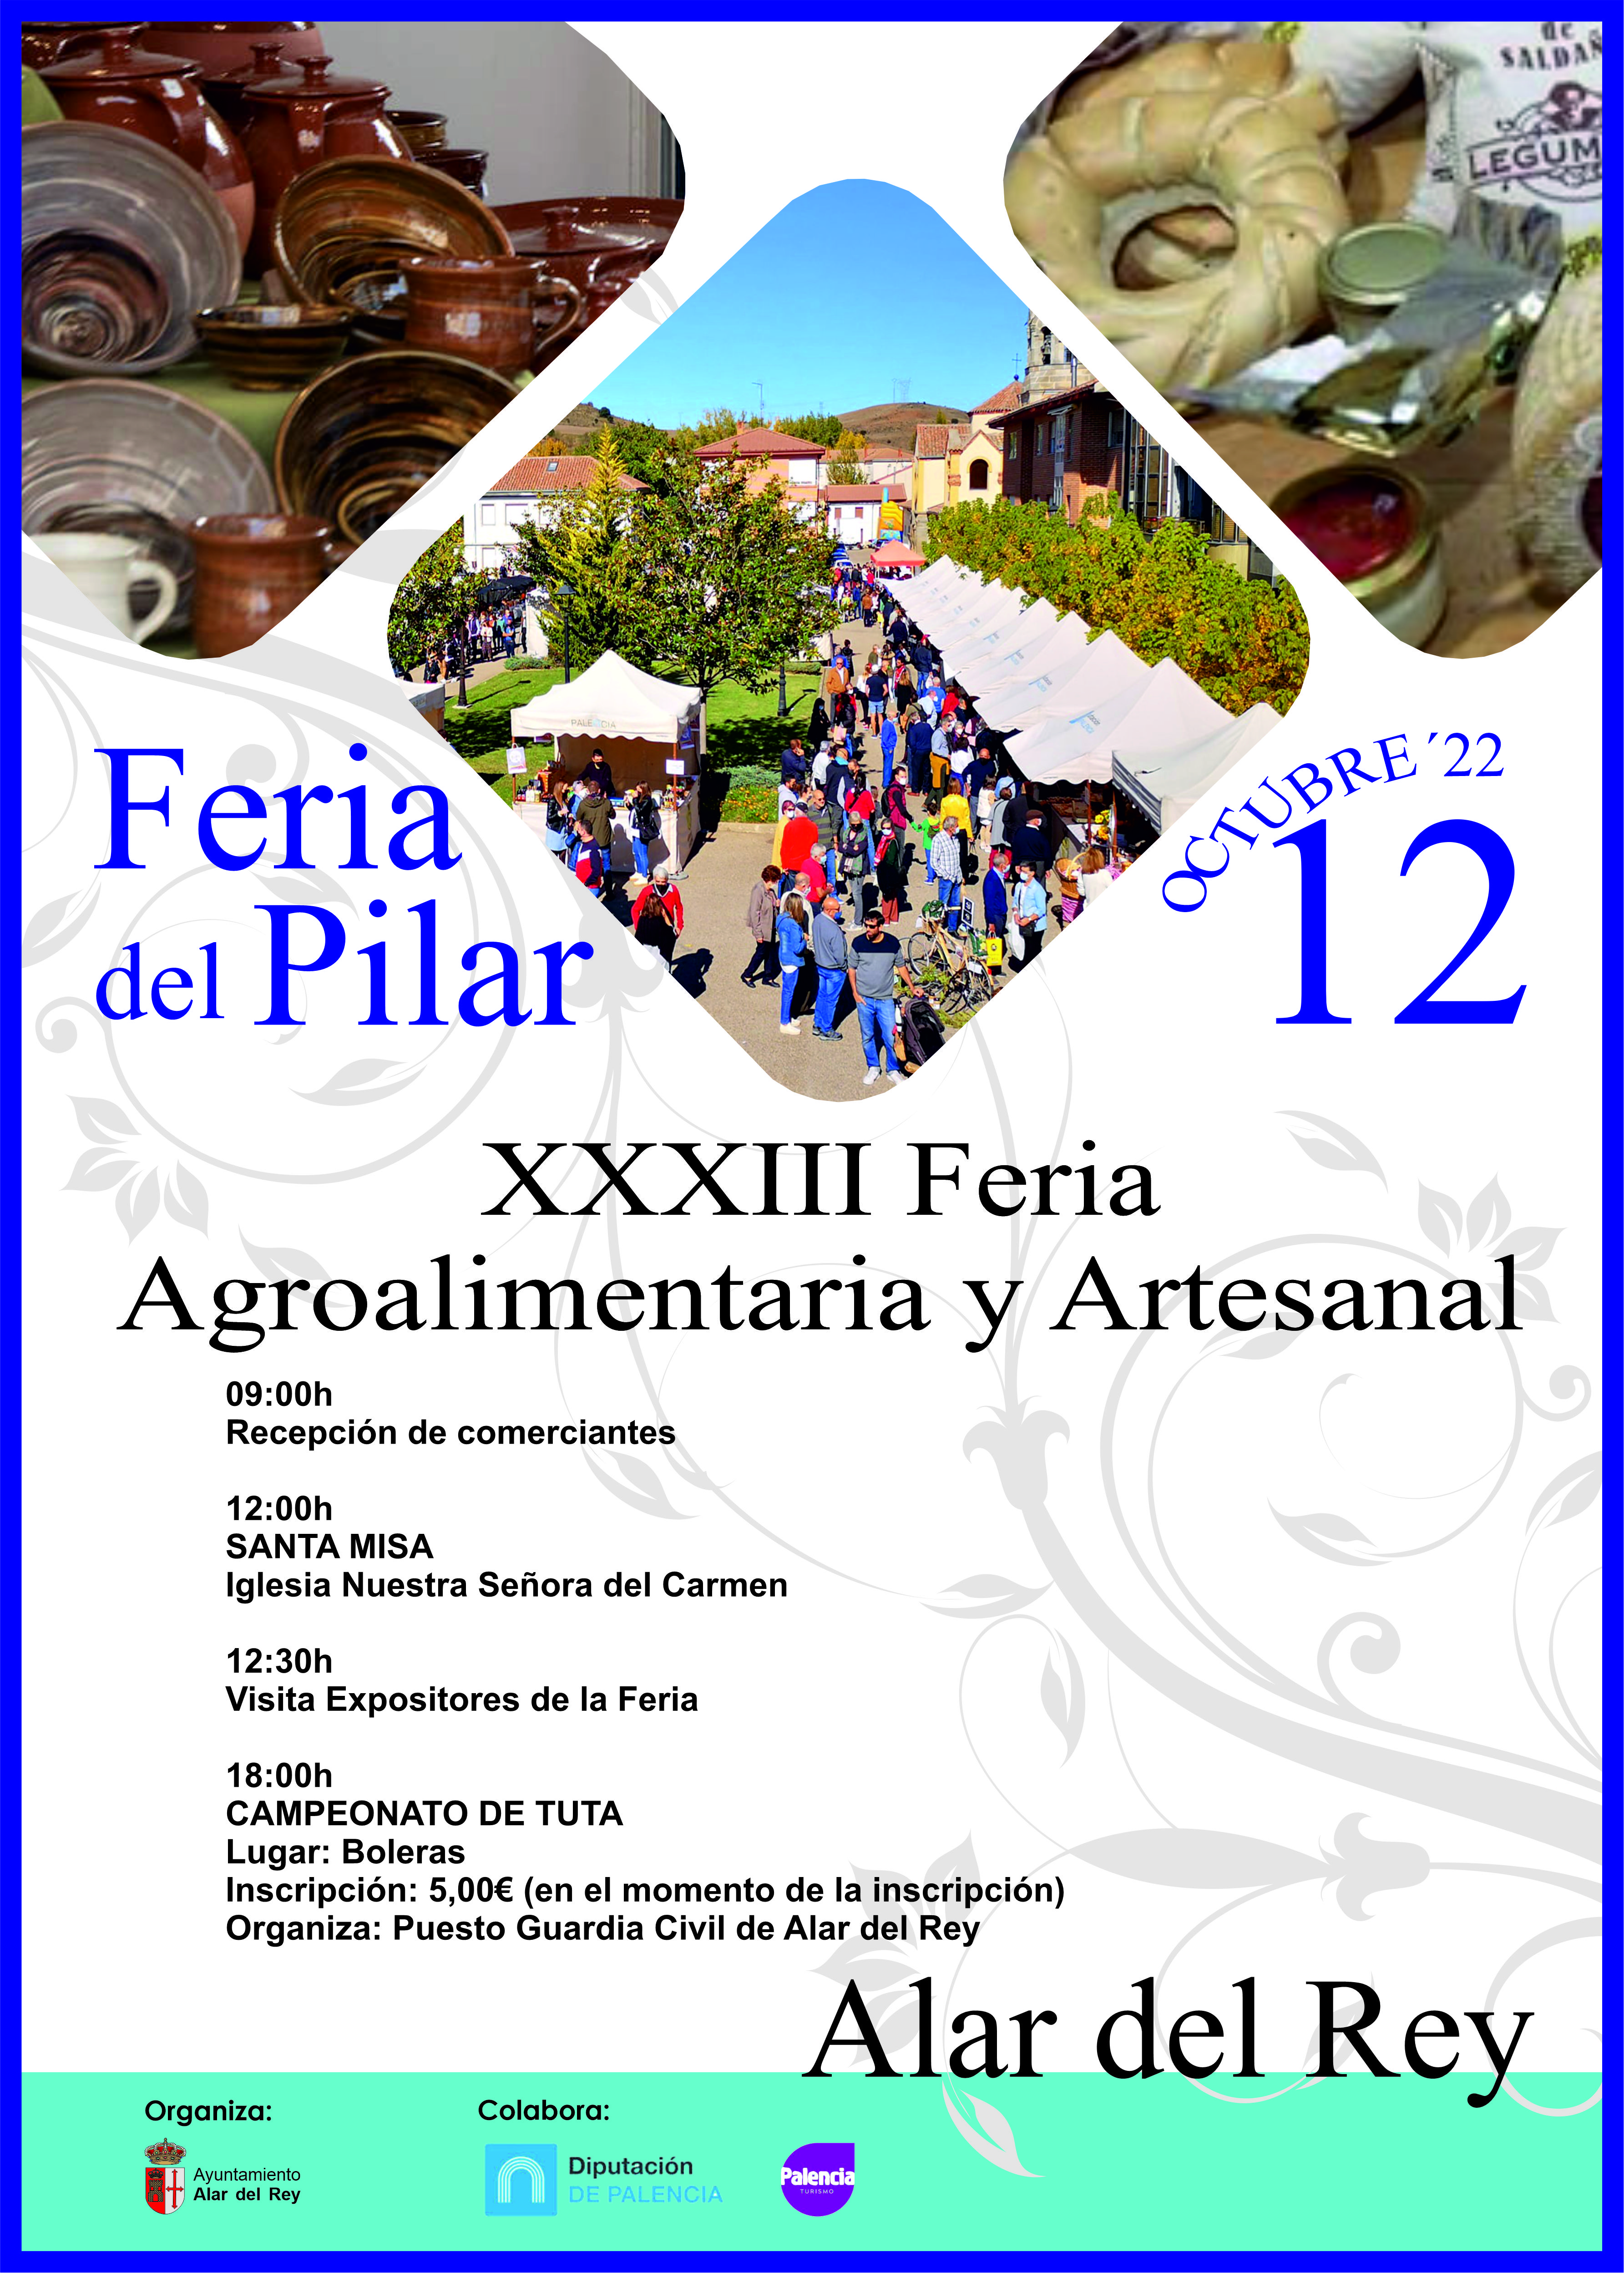 XXXI Feria Agroalimentaria y Artesanal del Pilar